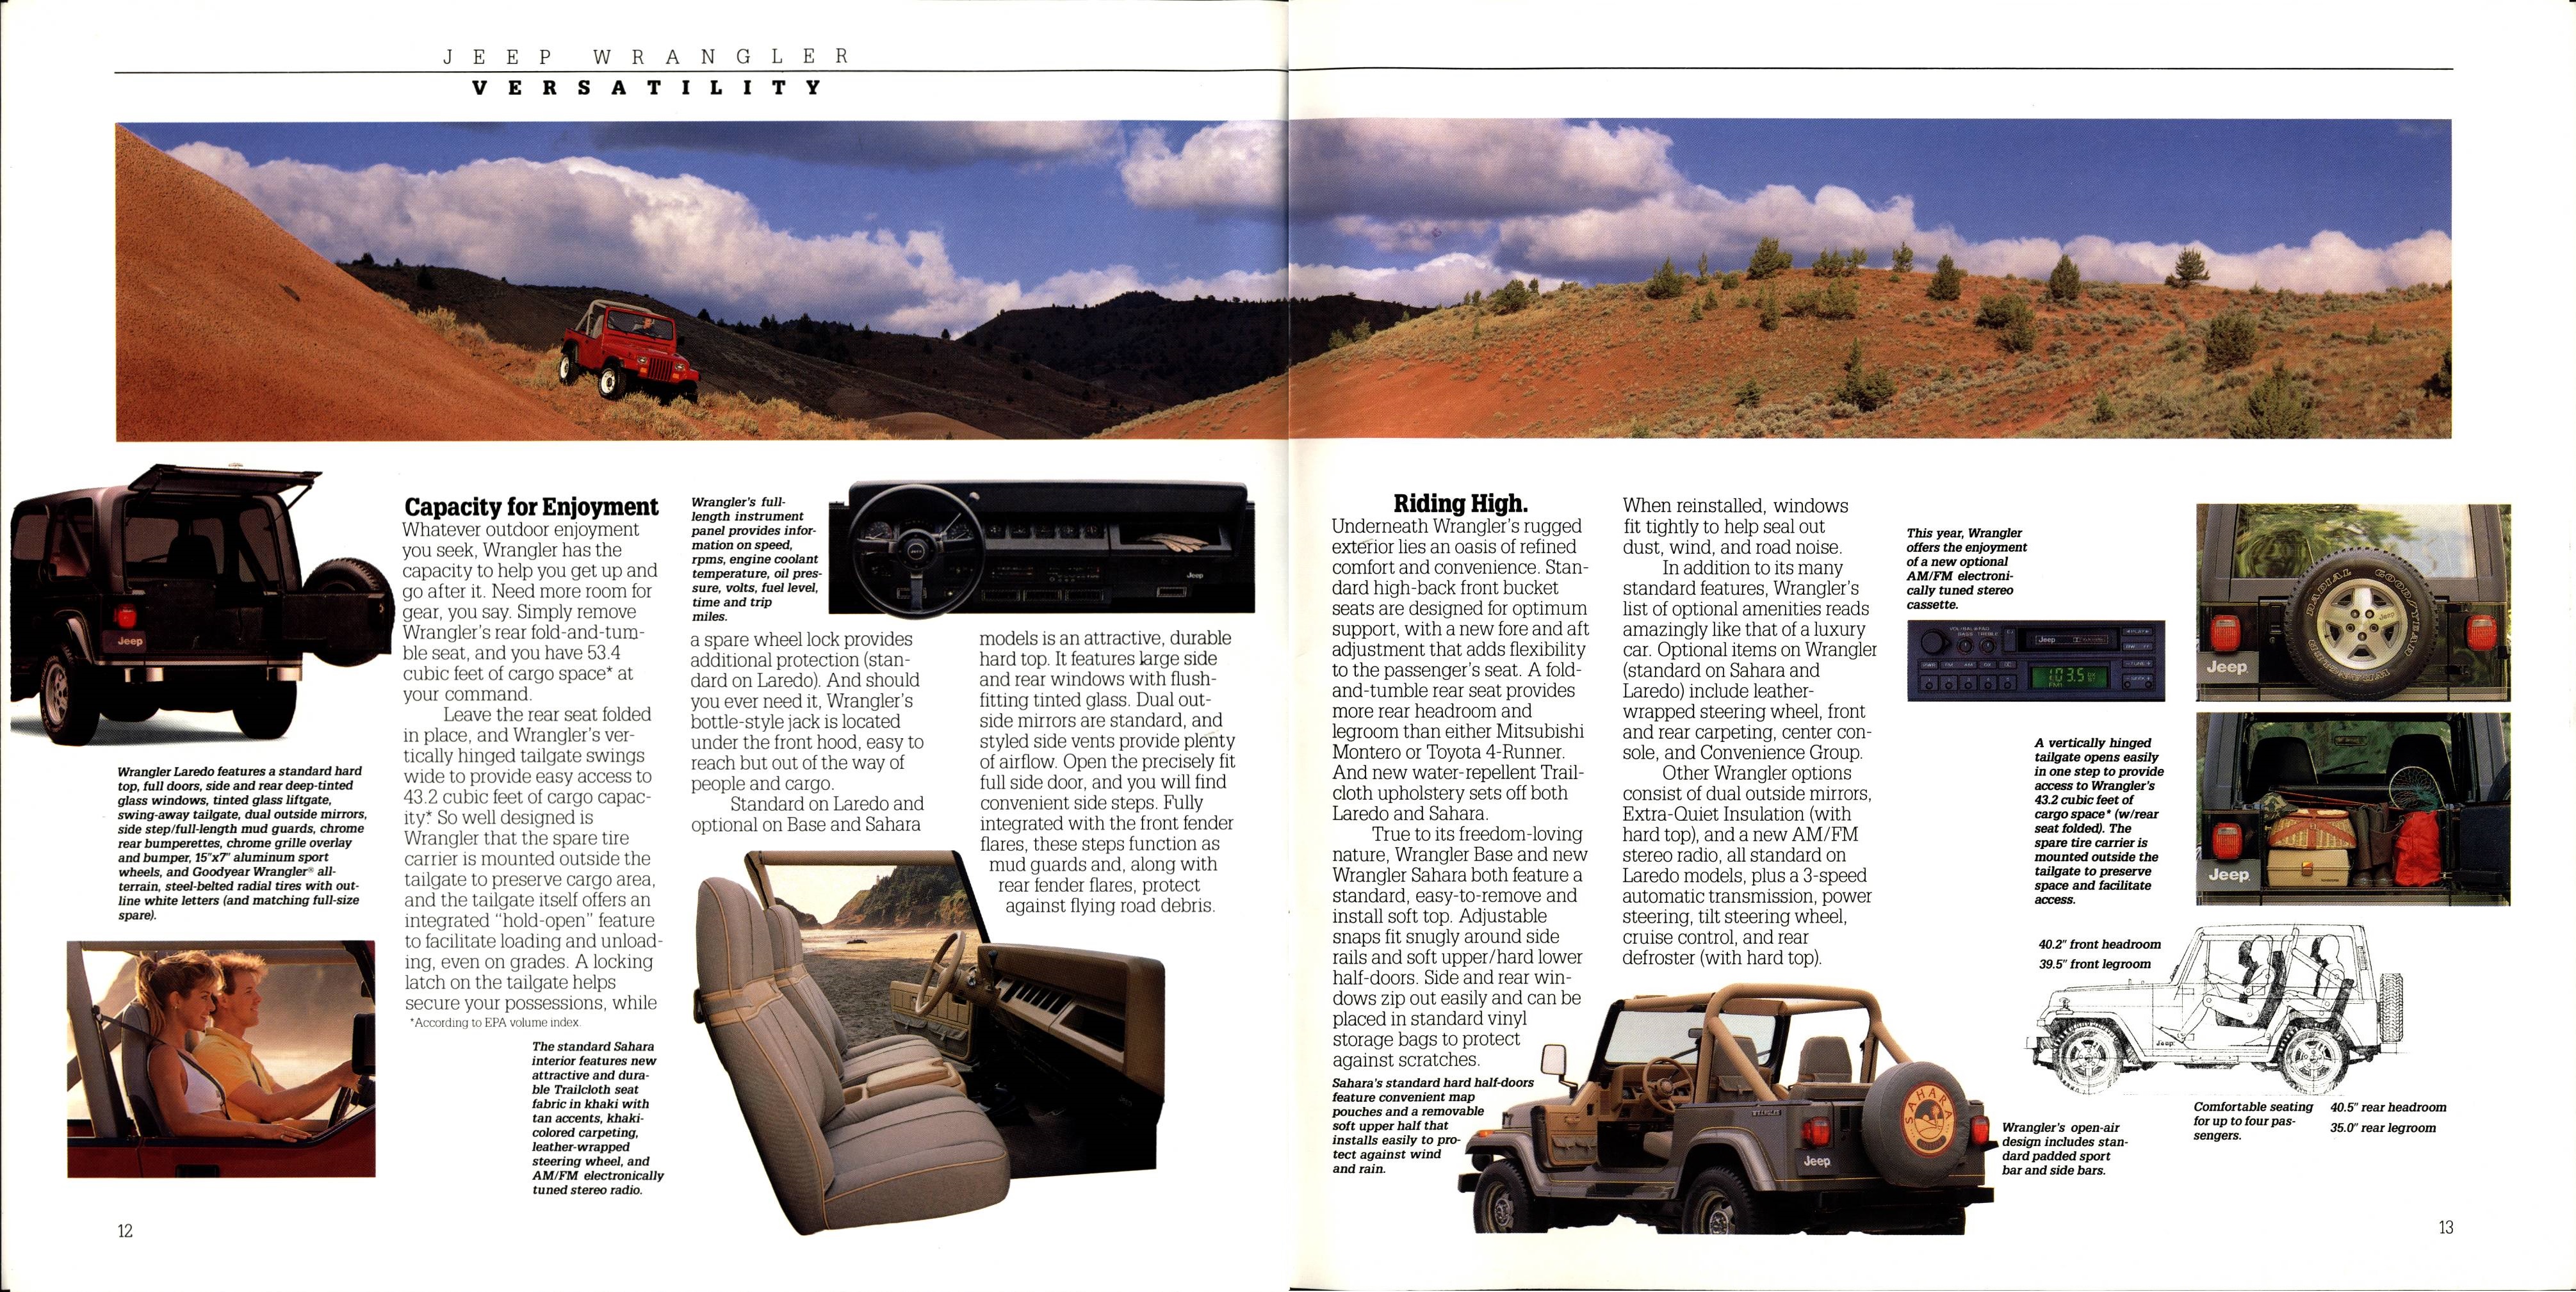 1988 Jeep Wrangler Brochure 12-13